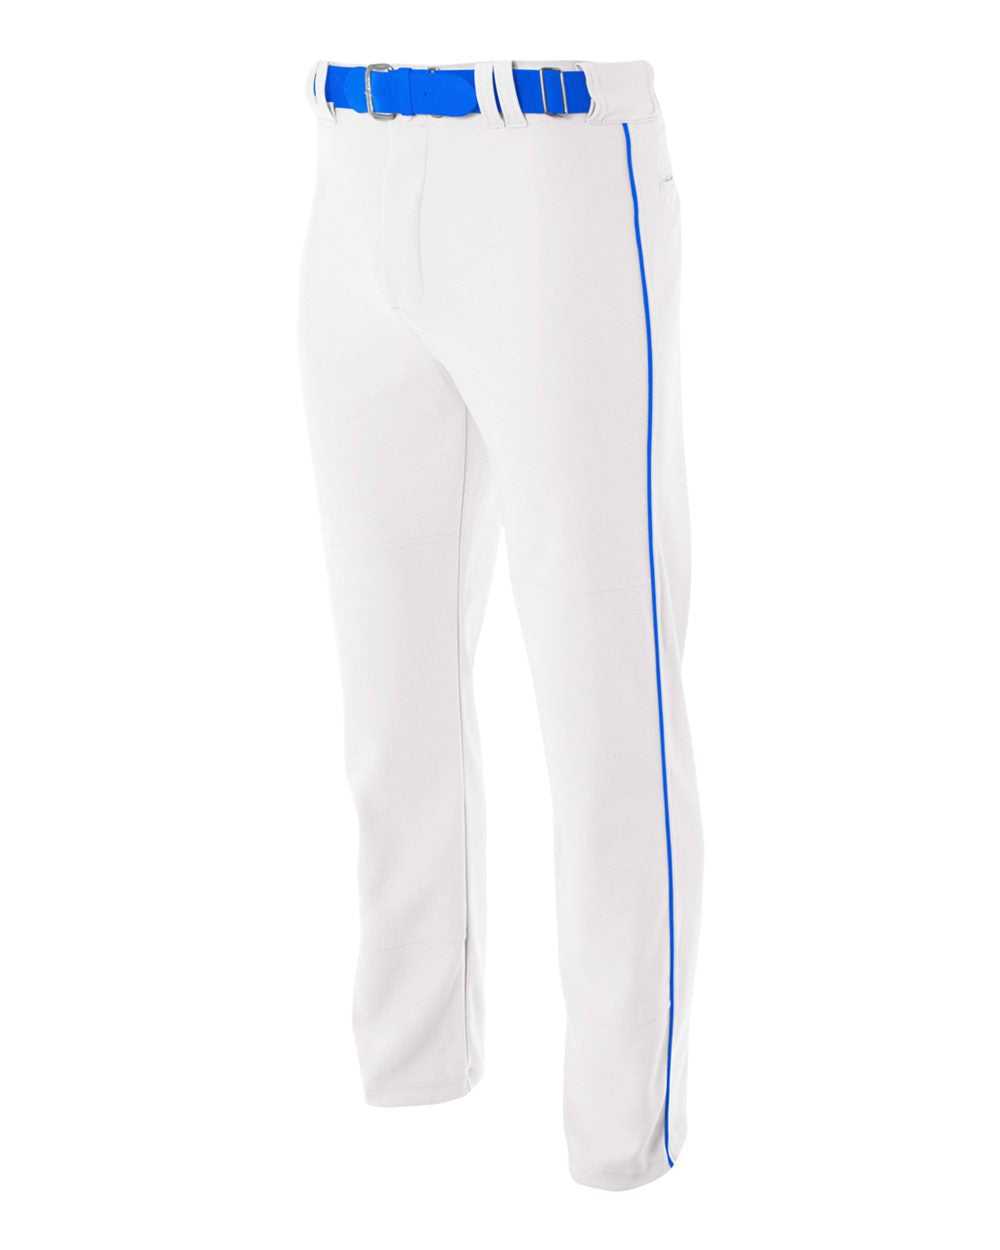 A4 N6162 Pro Style Open Bottom Baggy Cut Baseball Pant - White Royal - HIT a Double